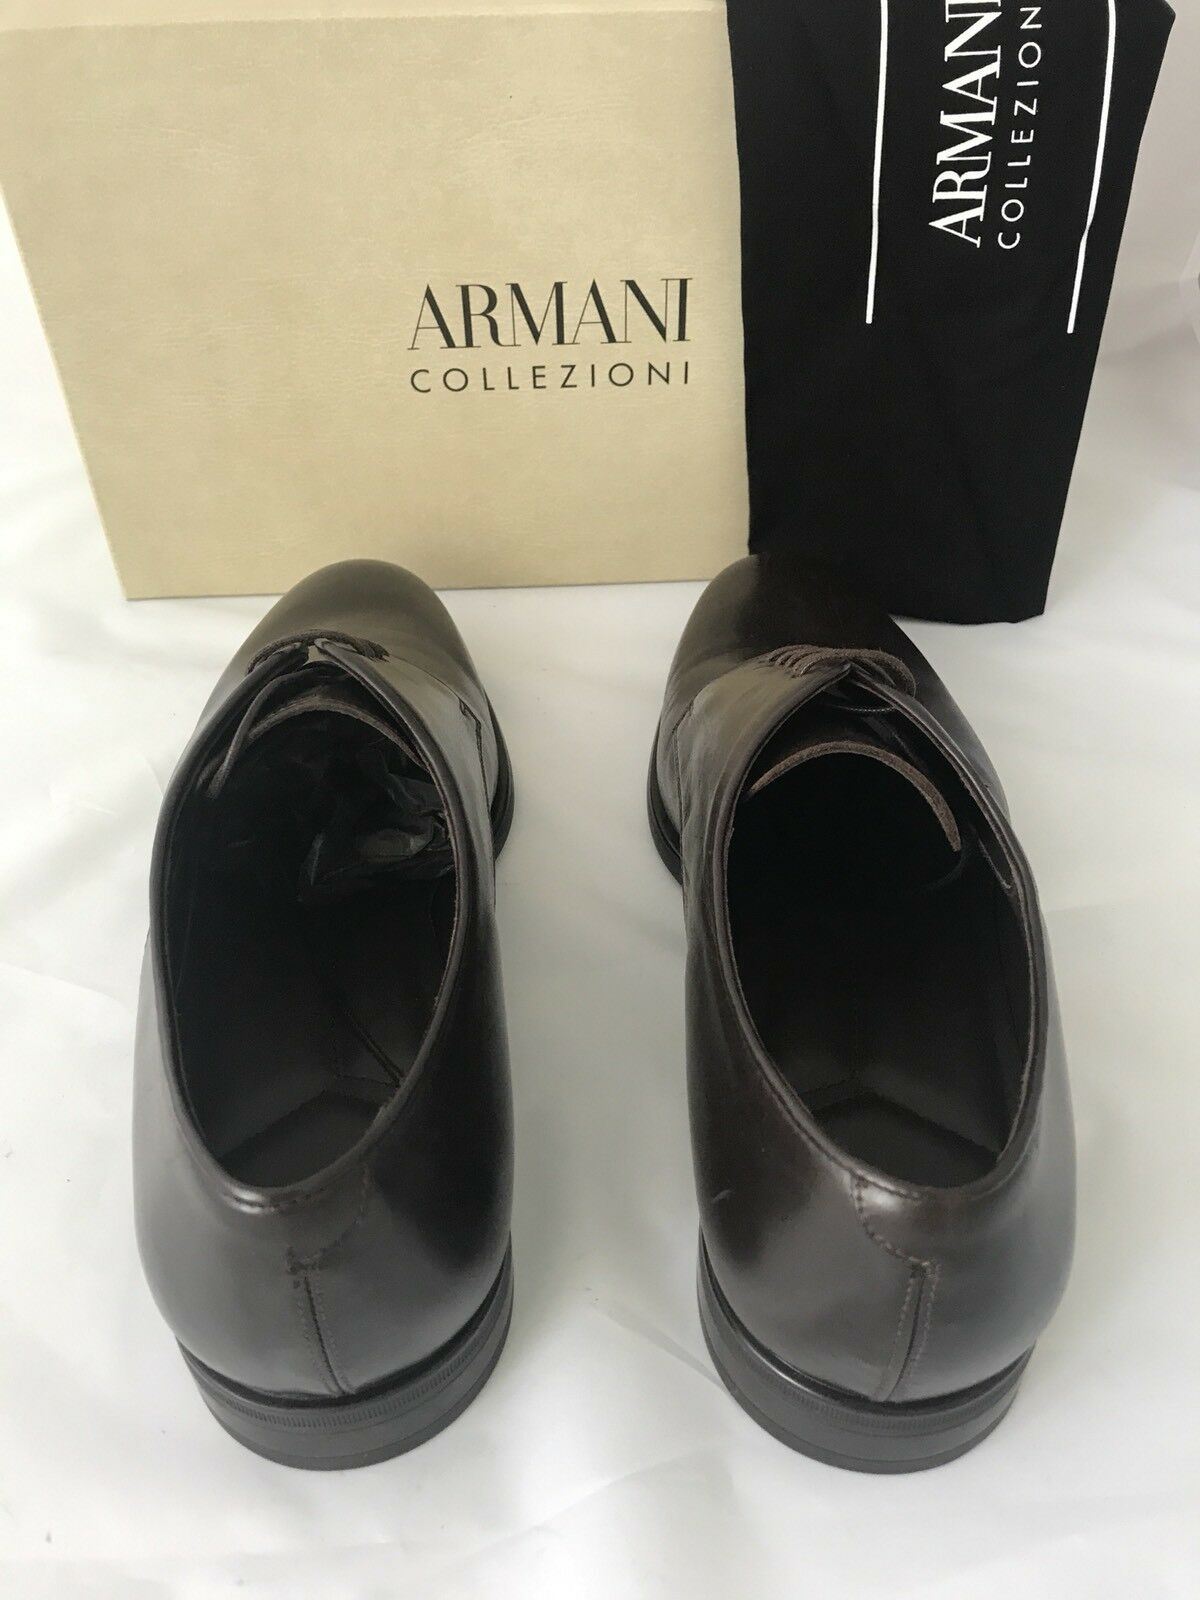 NIB $795 Armani Collezioni Leather Men’s Shoes Brown 12.5 US 45.5 Eu Italy